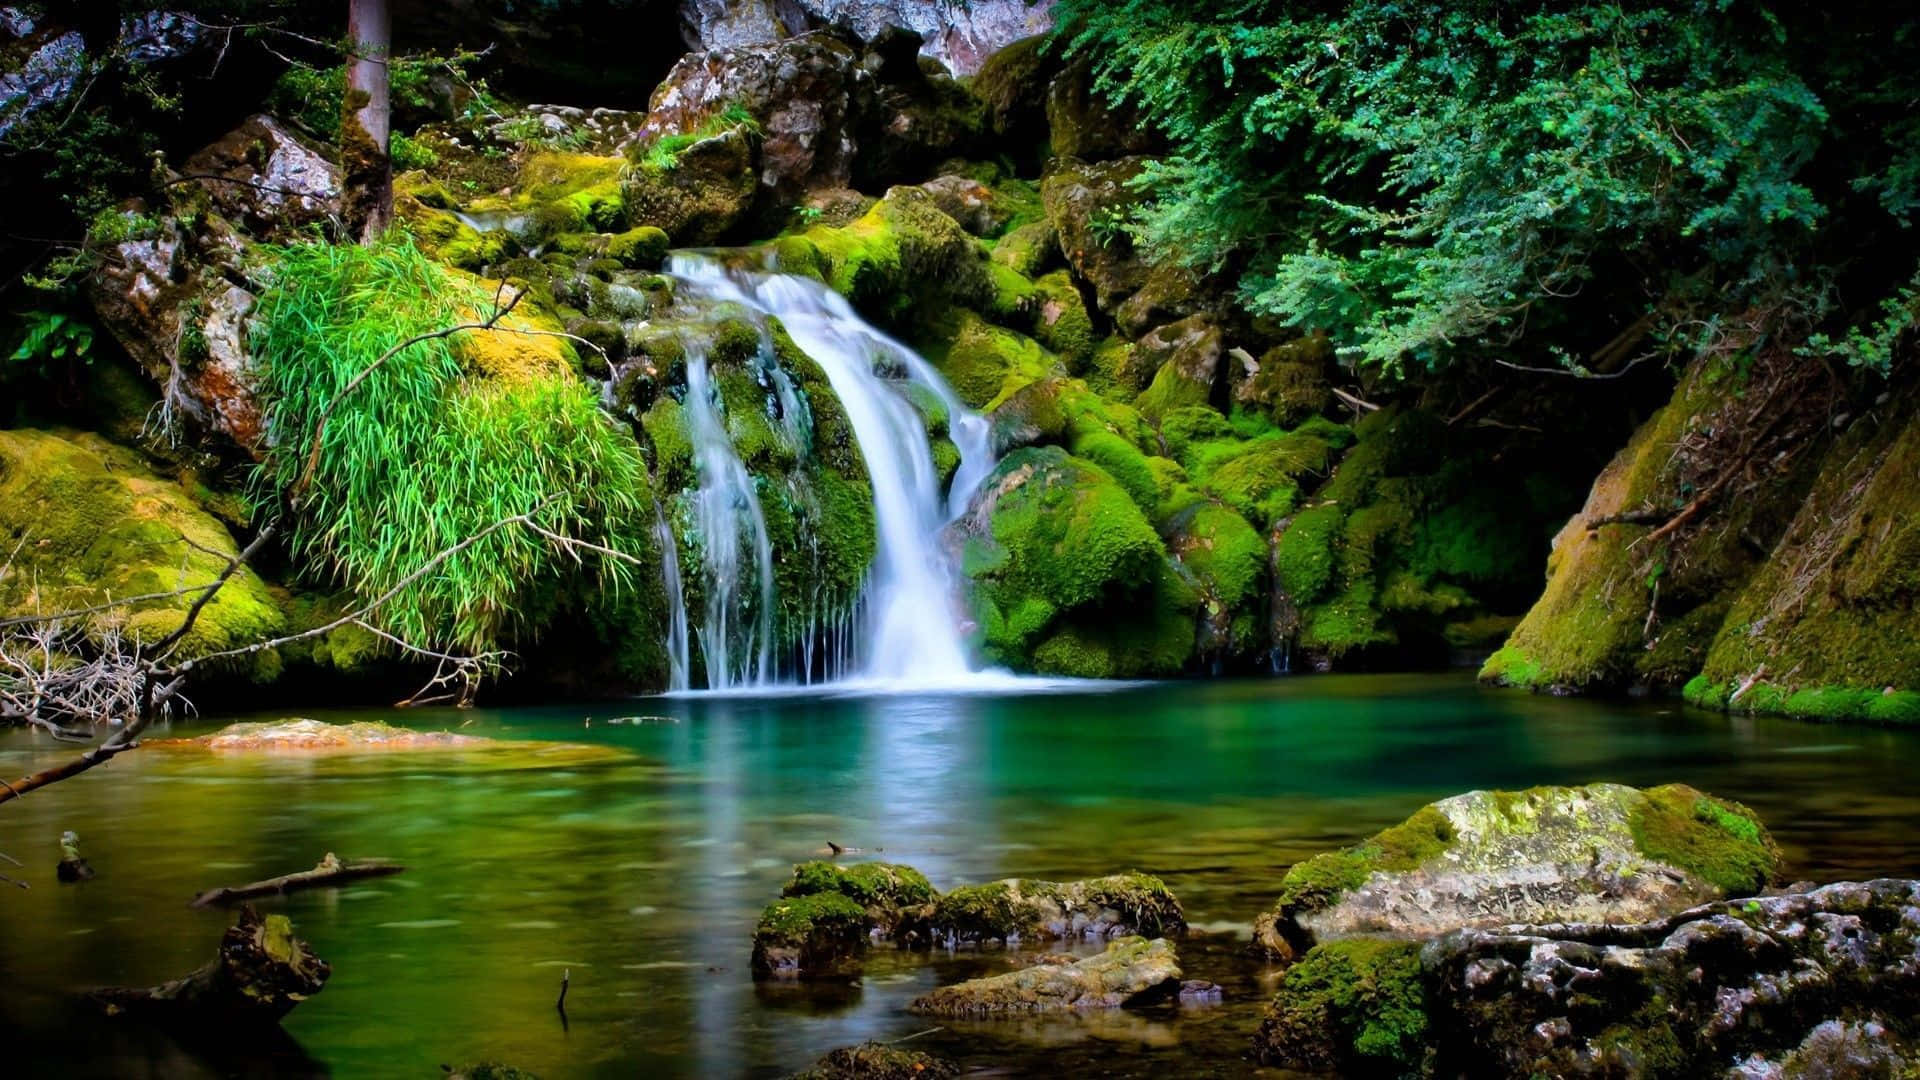 Gorgeous Waterfall Displaying Nature's Majesty"